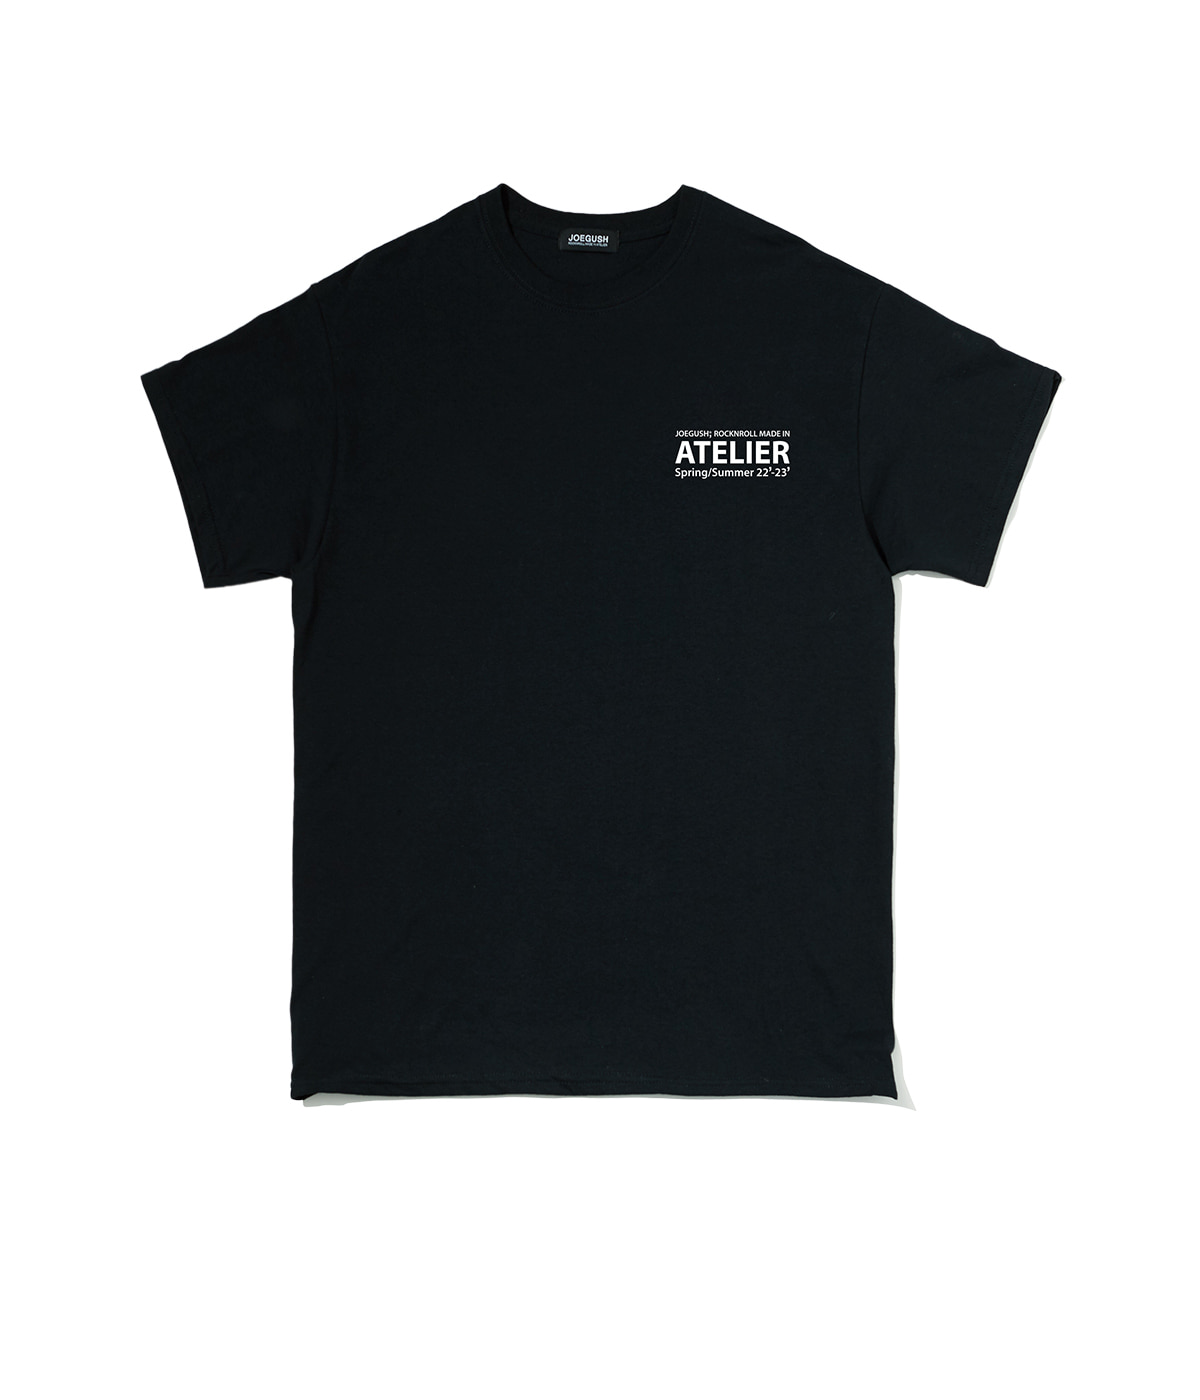 Atelier T-shirt (Black)